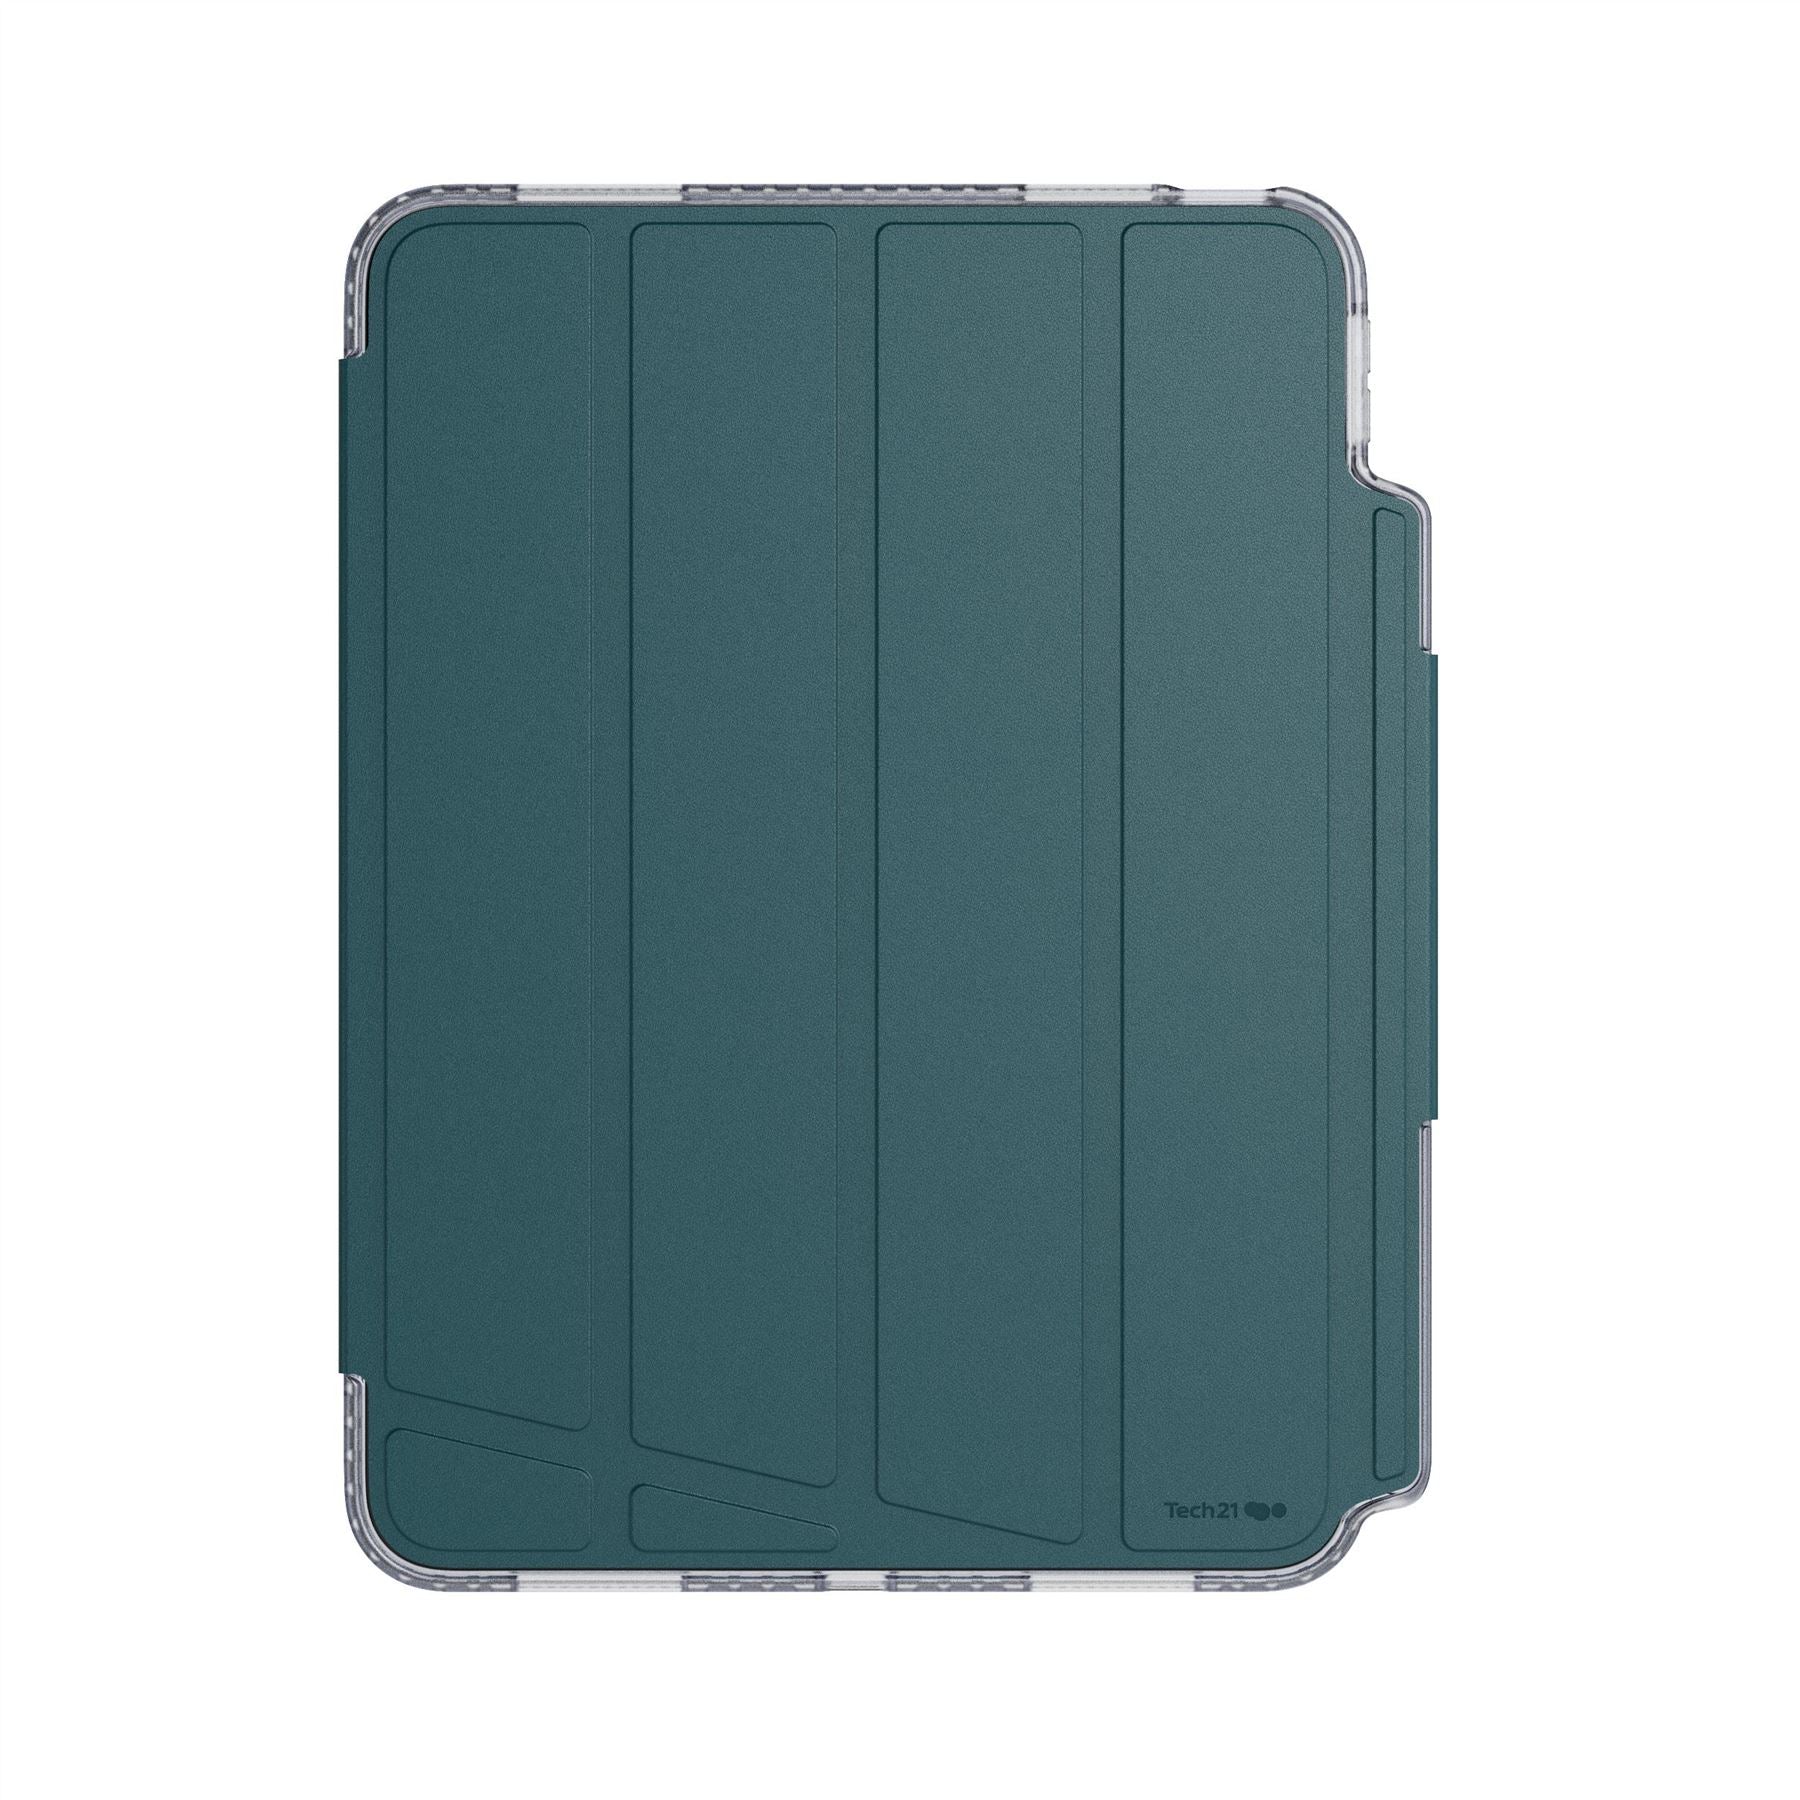 Evo Folio - Apple iPad 10th Gen Case - Teal